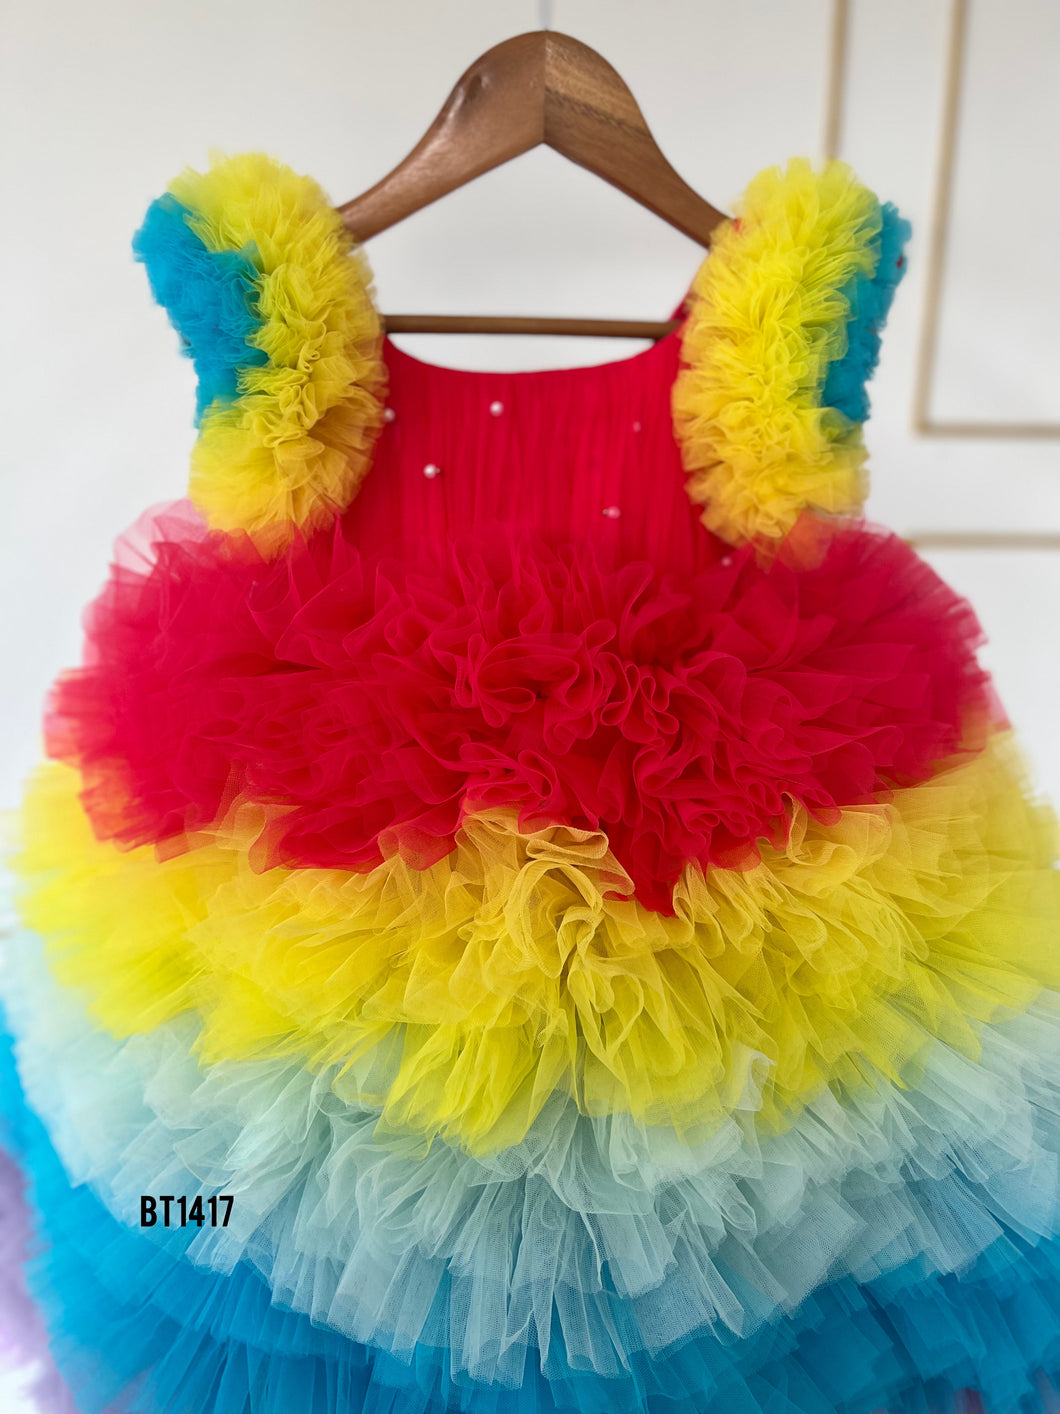 BT1417 Rainbow Rhapsody Festive Dress for Babies